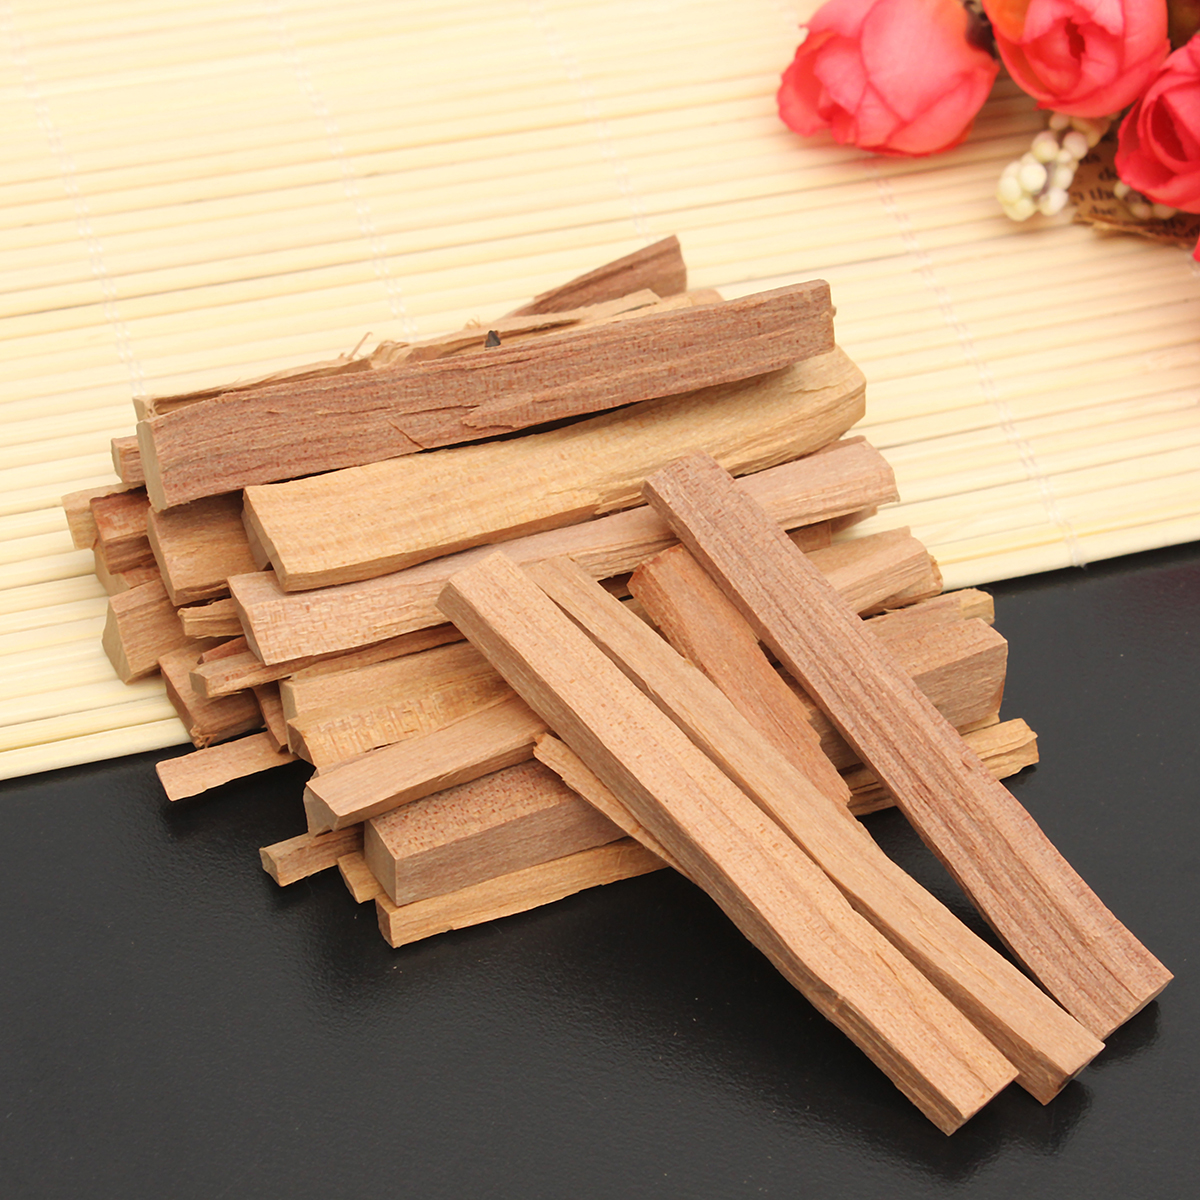 Sandalwood-Herbal-Incense-Holy-Irregular-Wood-Sticks-Resin-Household-Fragrance-Decorations-1360698